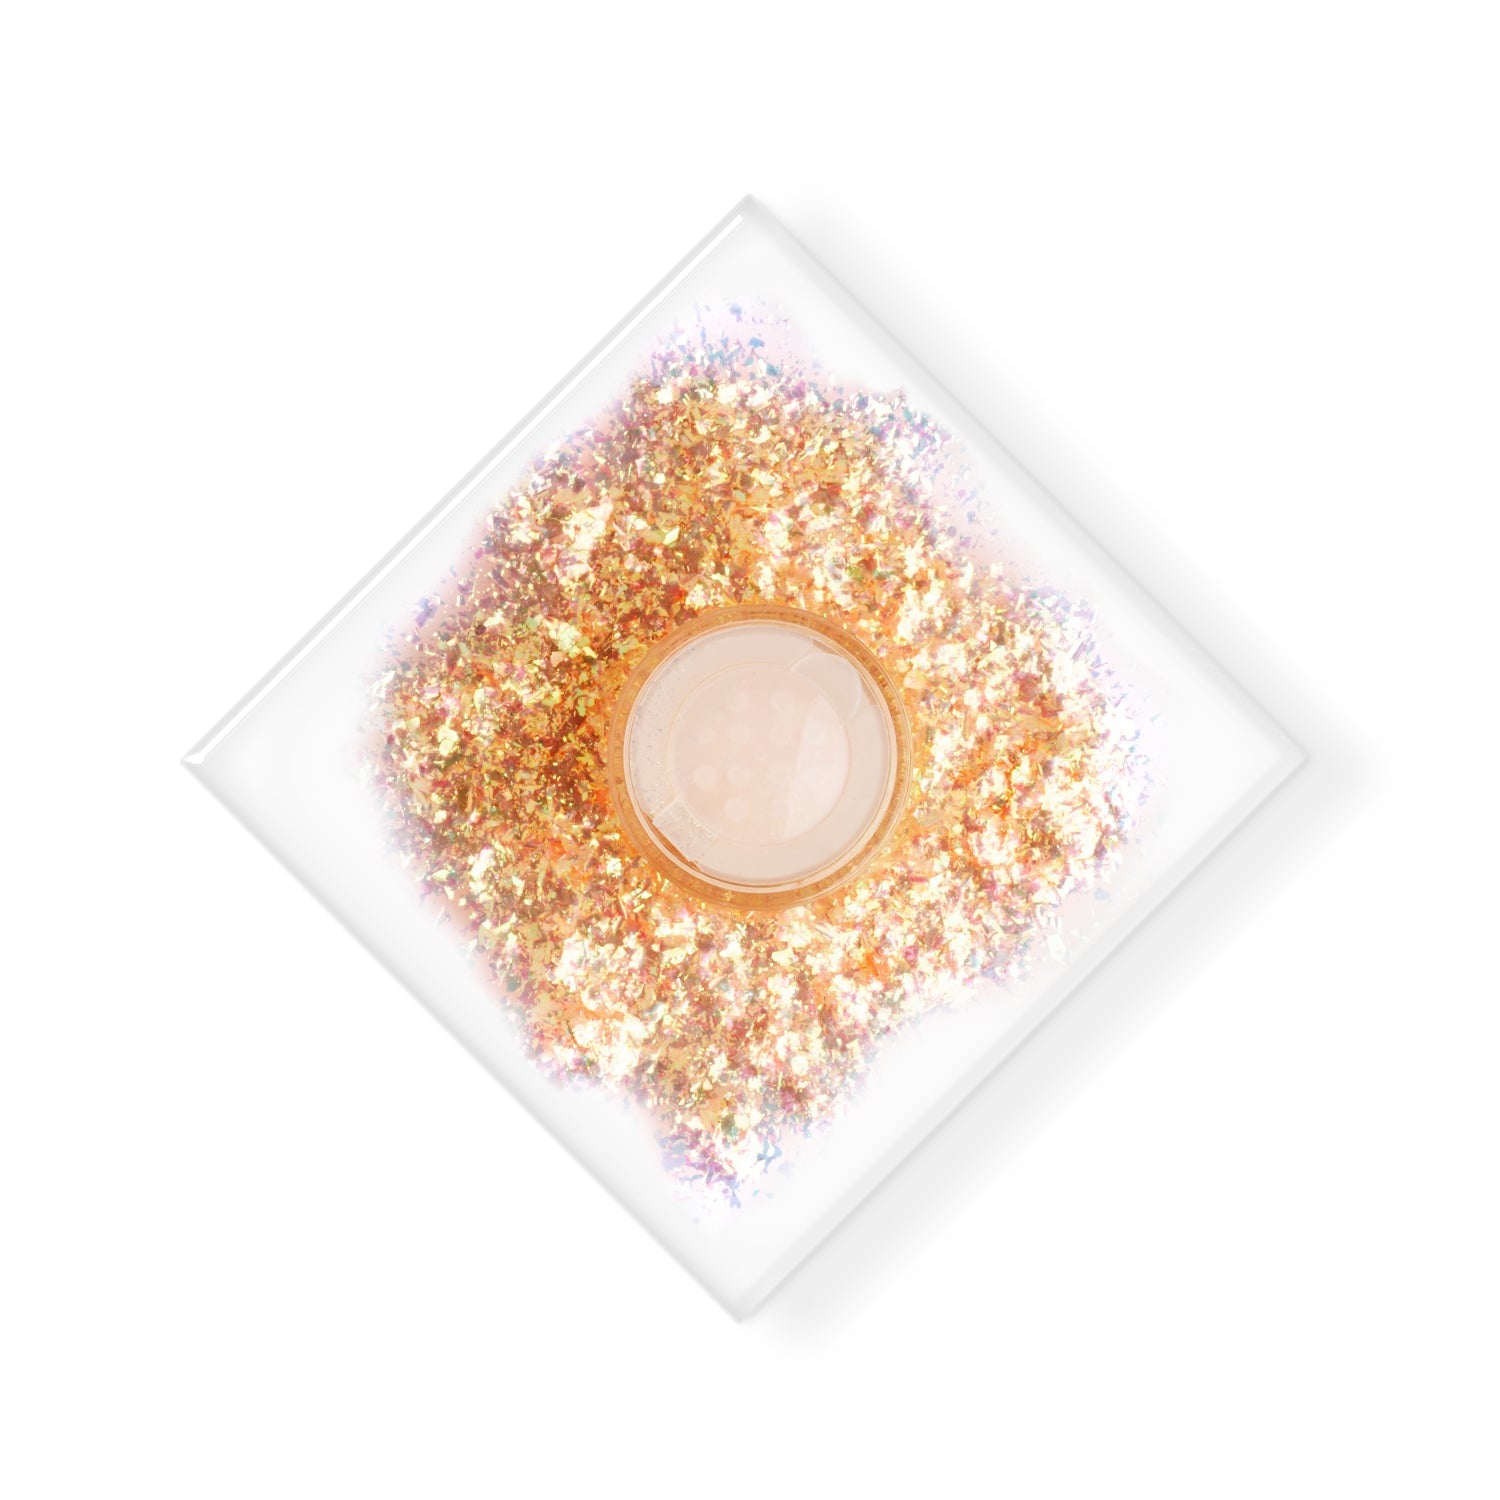 PAC Cosmetics Dazzle Dust Glitter (0.25g) #Color_Golden Hour